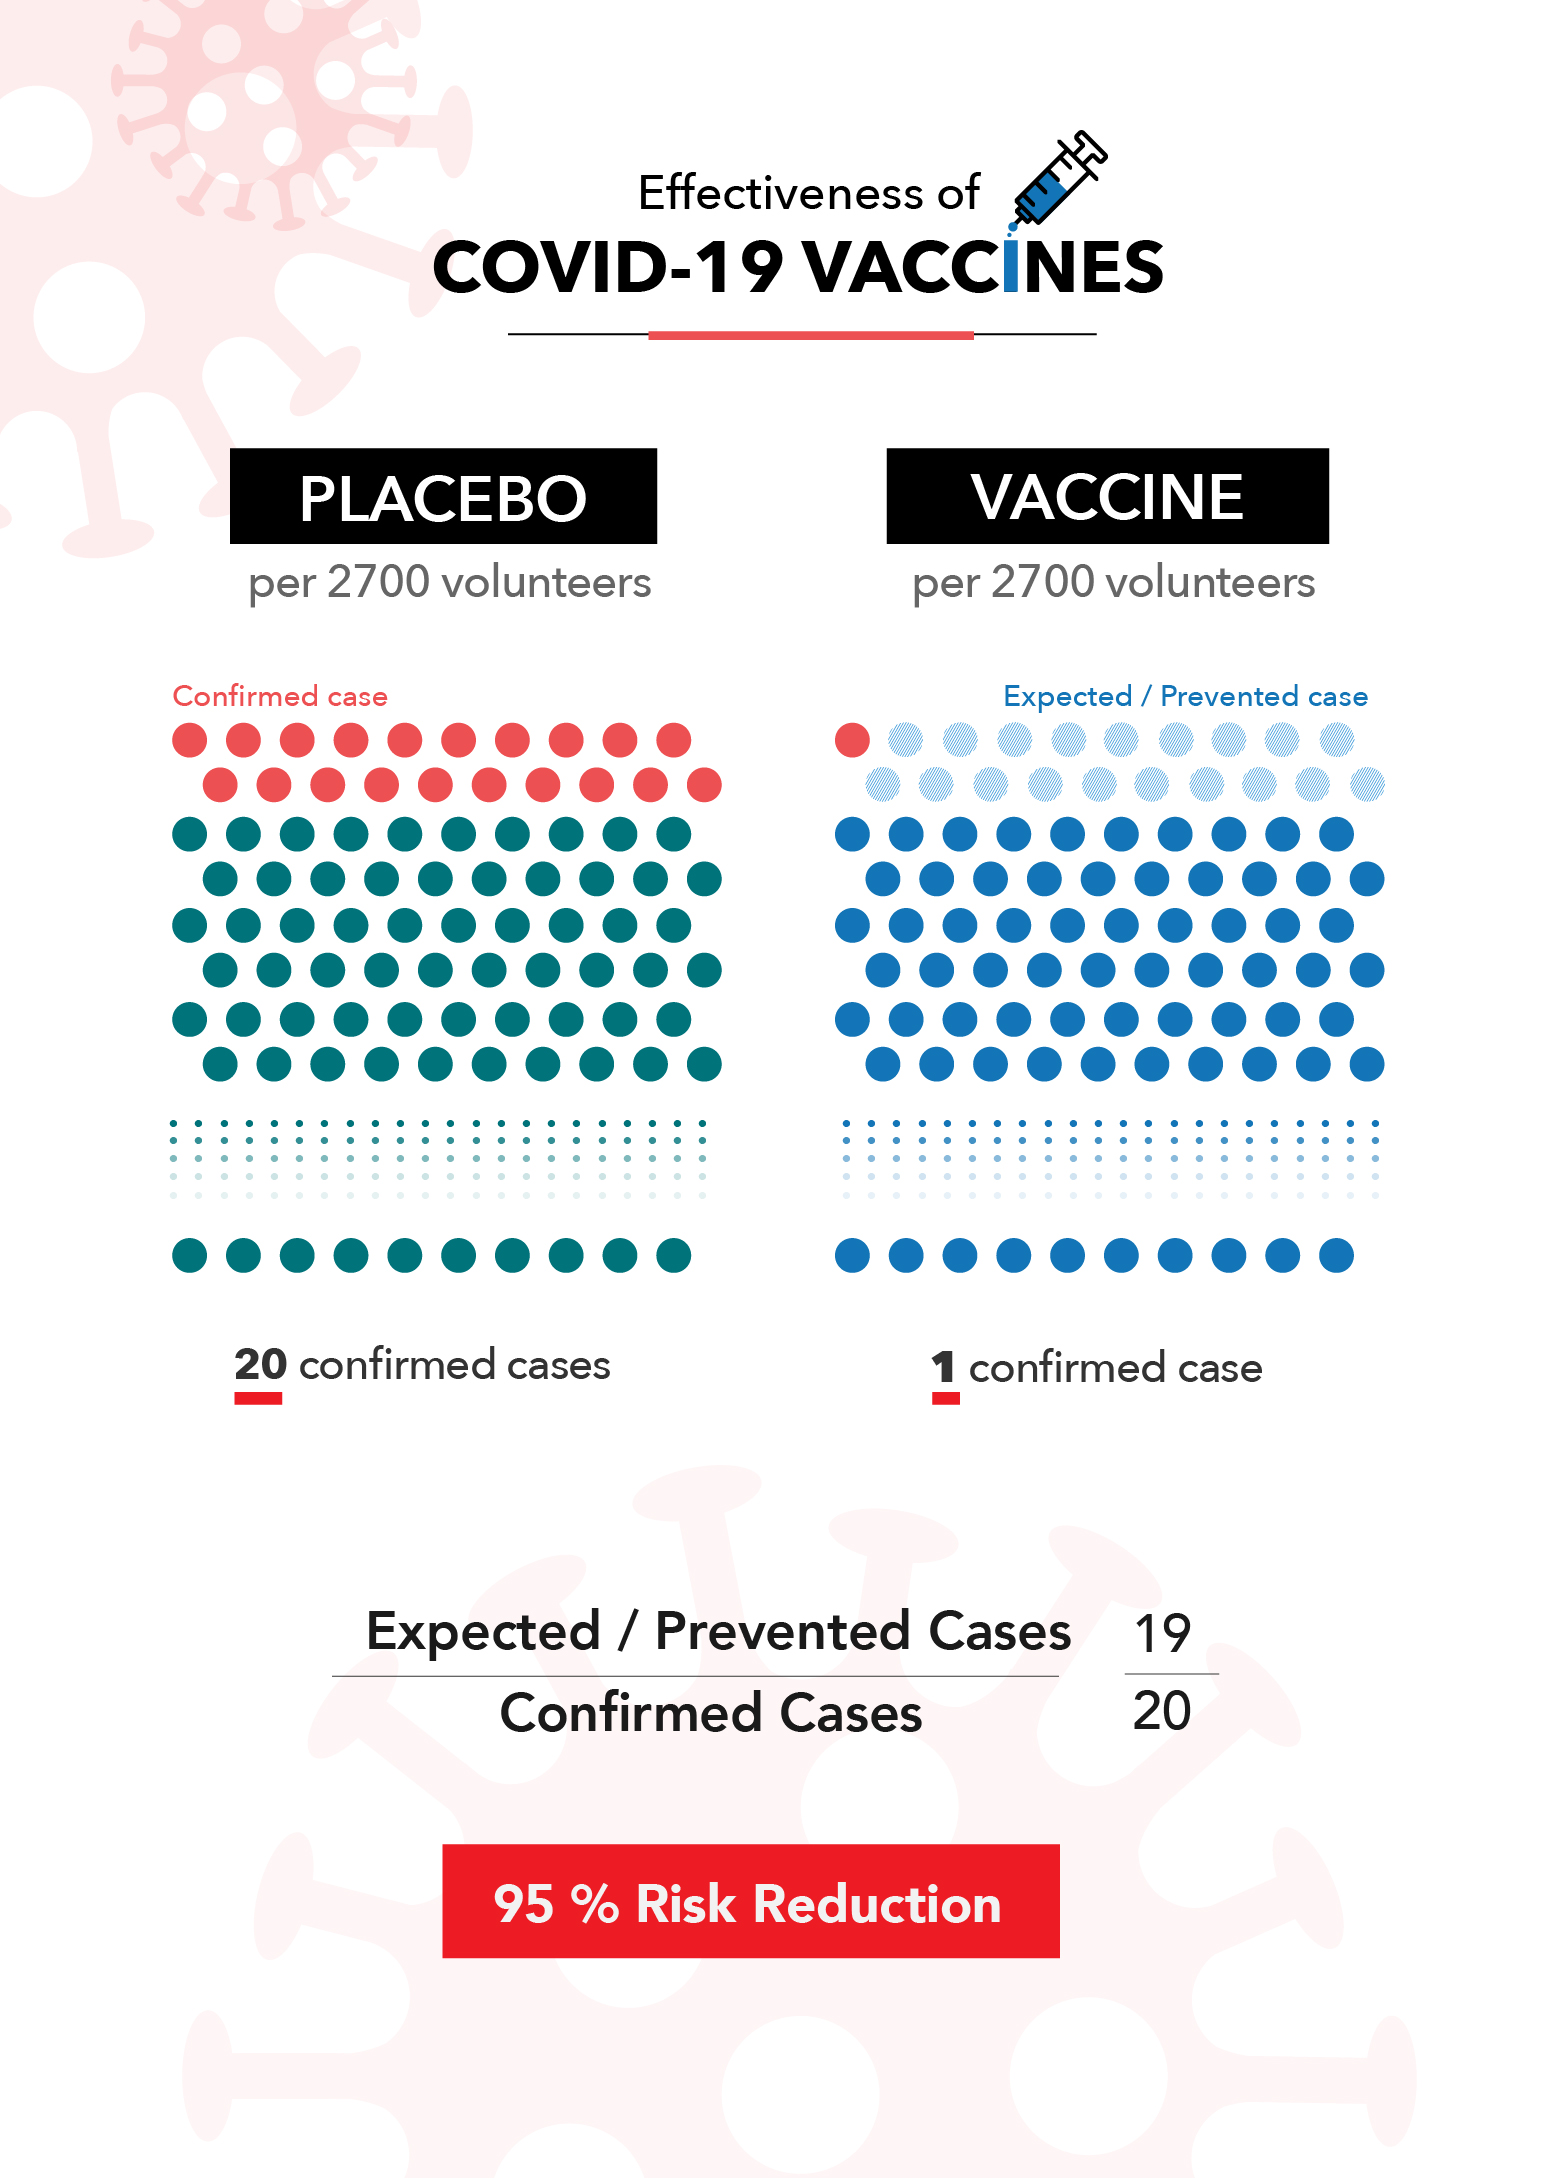 covid-19 vaccine efficiency infographic 